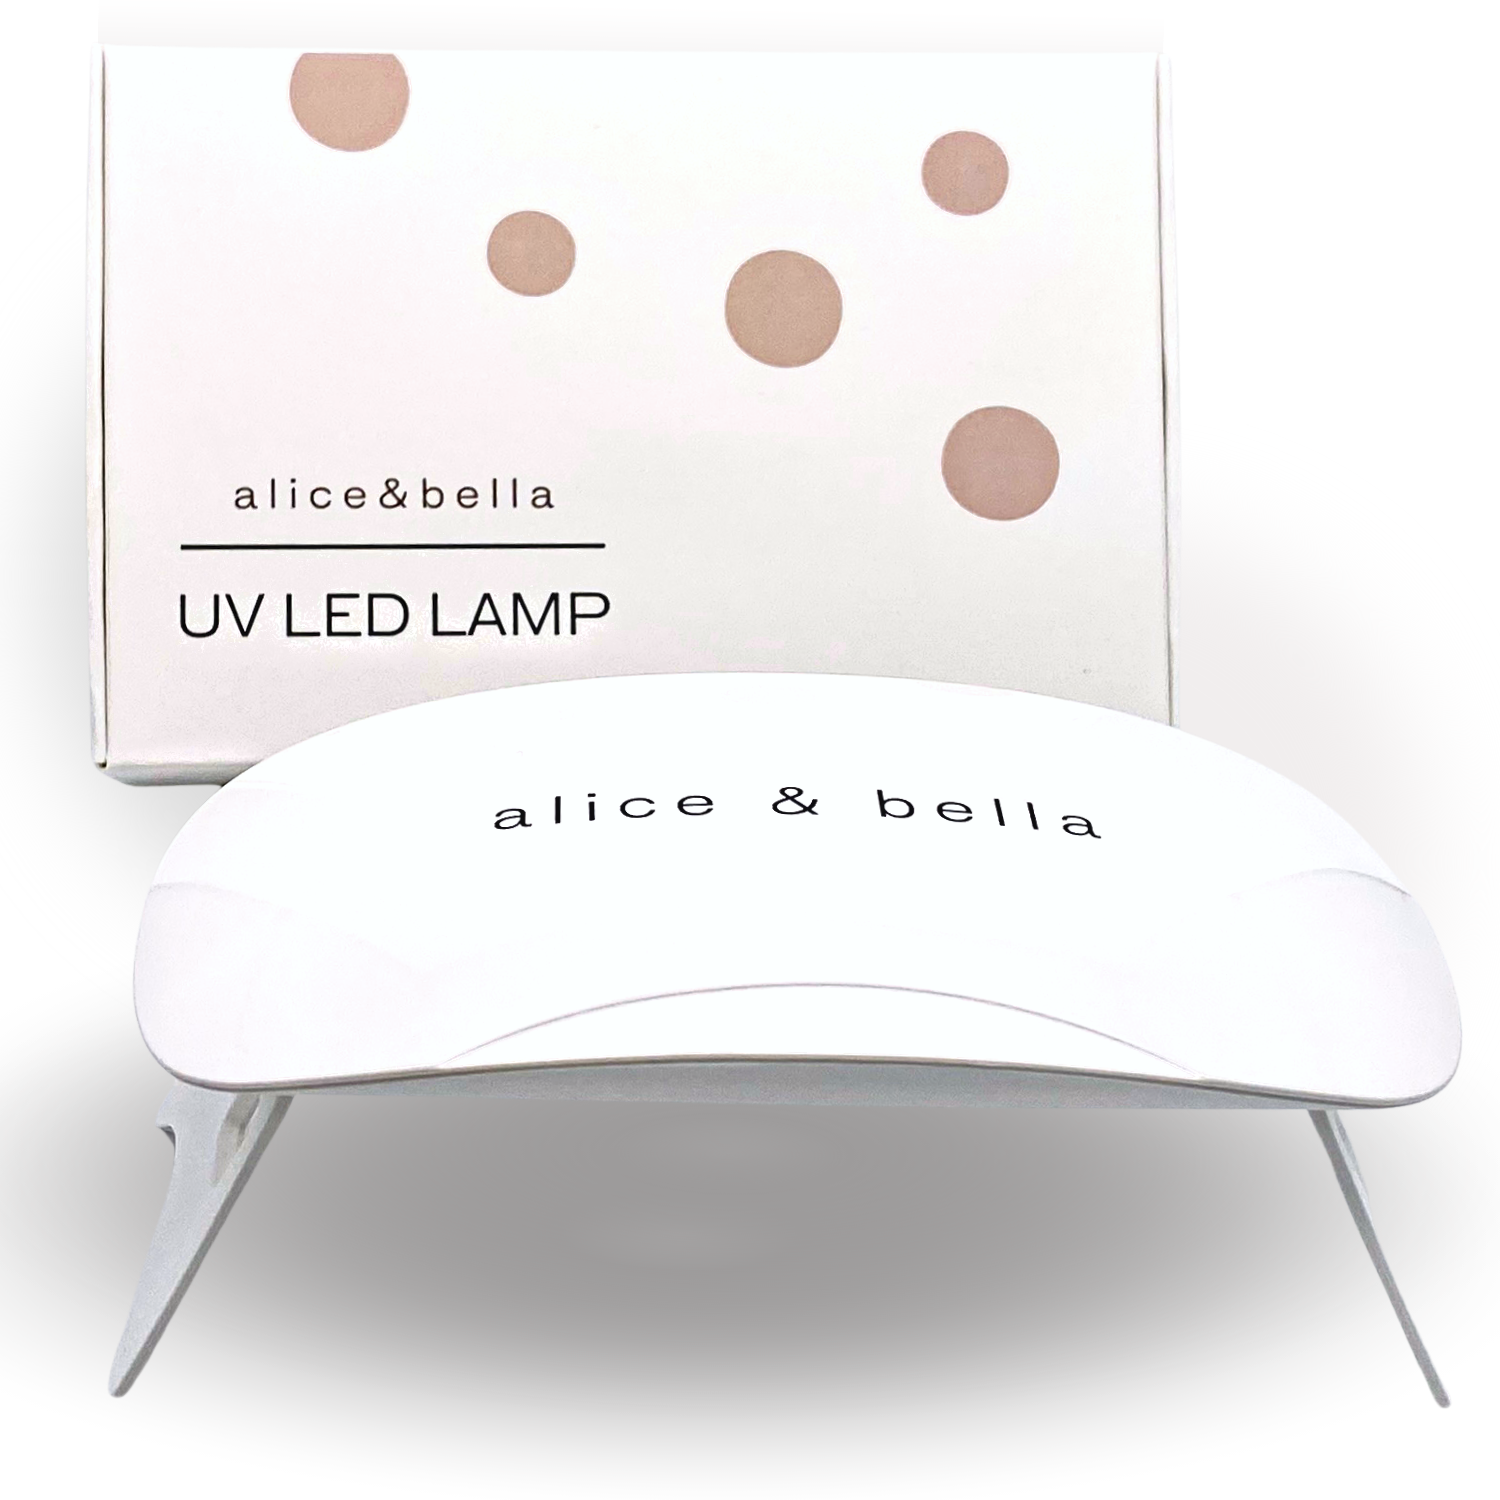 Belmint UV LED Lamp for Regular and Gel Nail Polish